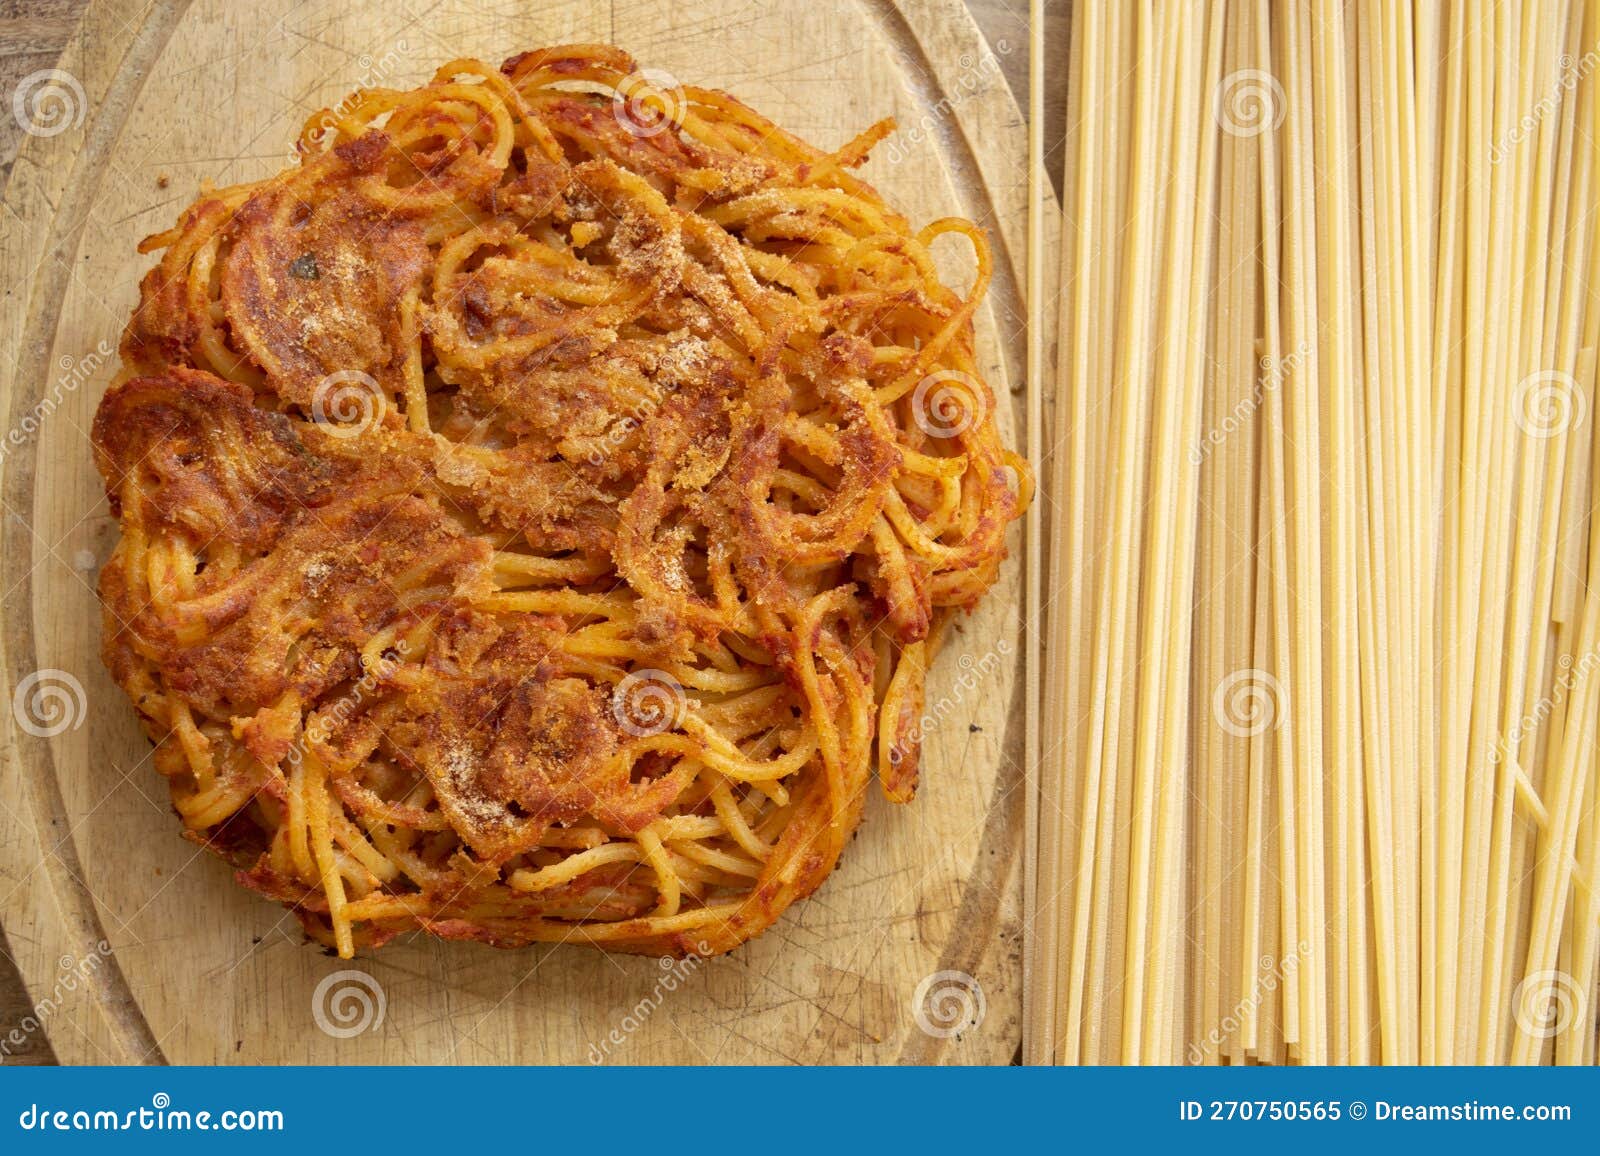 frittata of spaghetti pasta